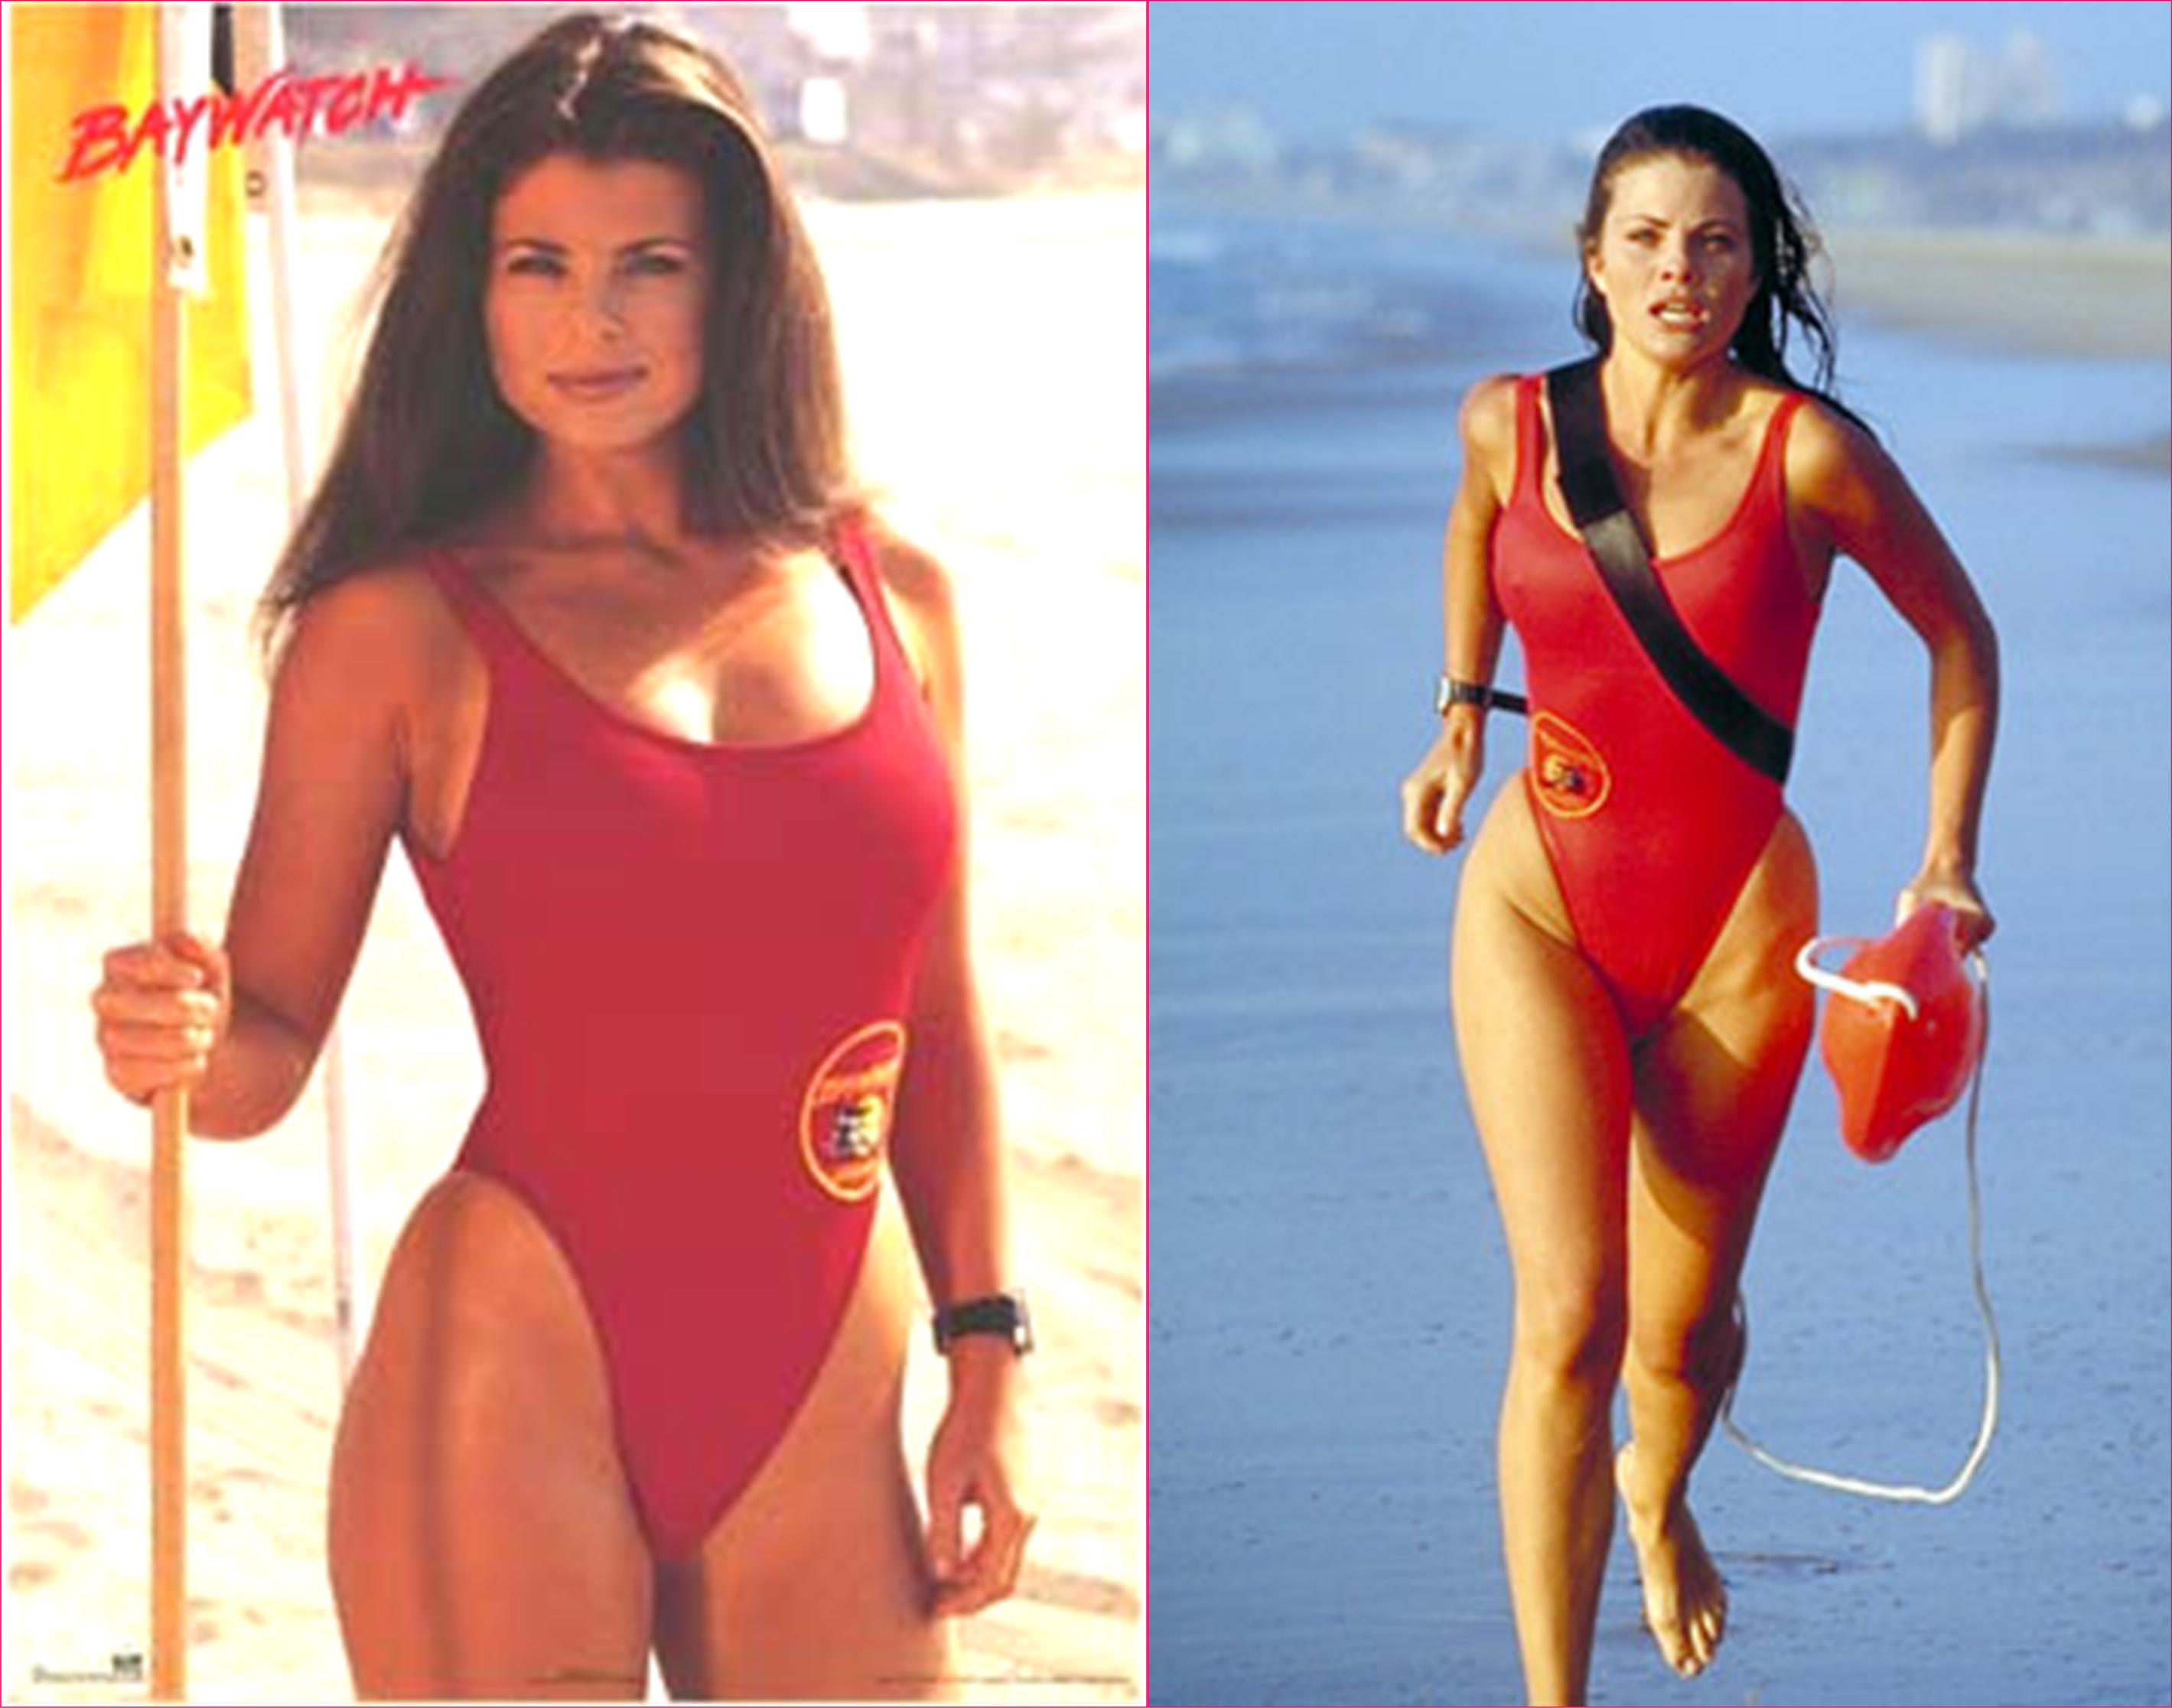 yasmine-bleeth vigilantes playa baywatch model photo gallery naughty underwear swimming suit bikini suits